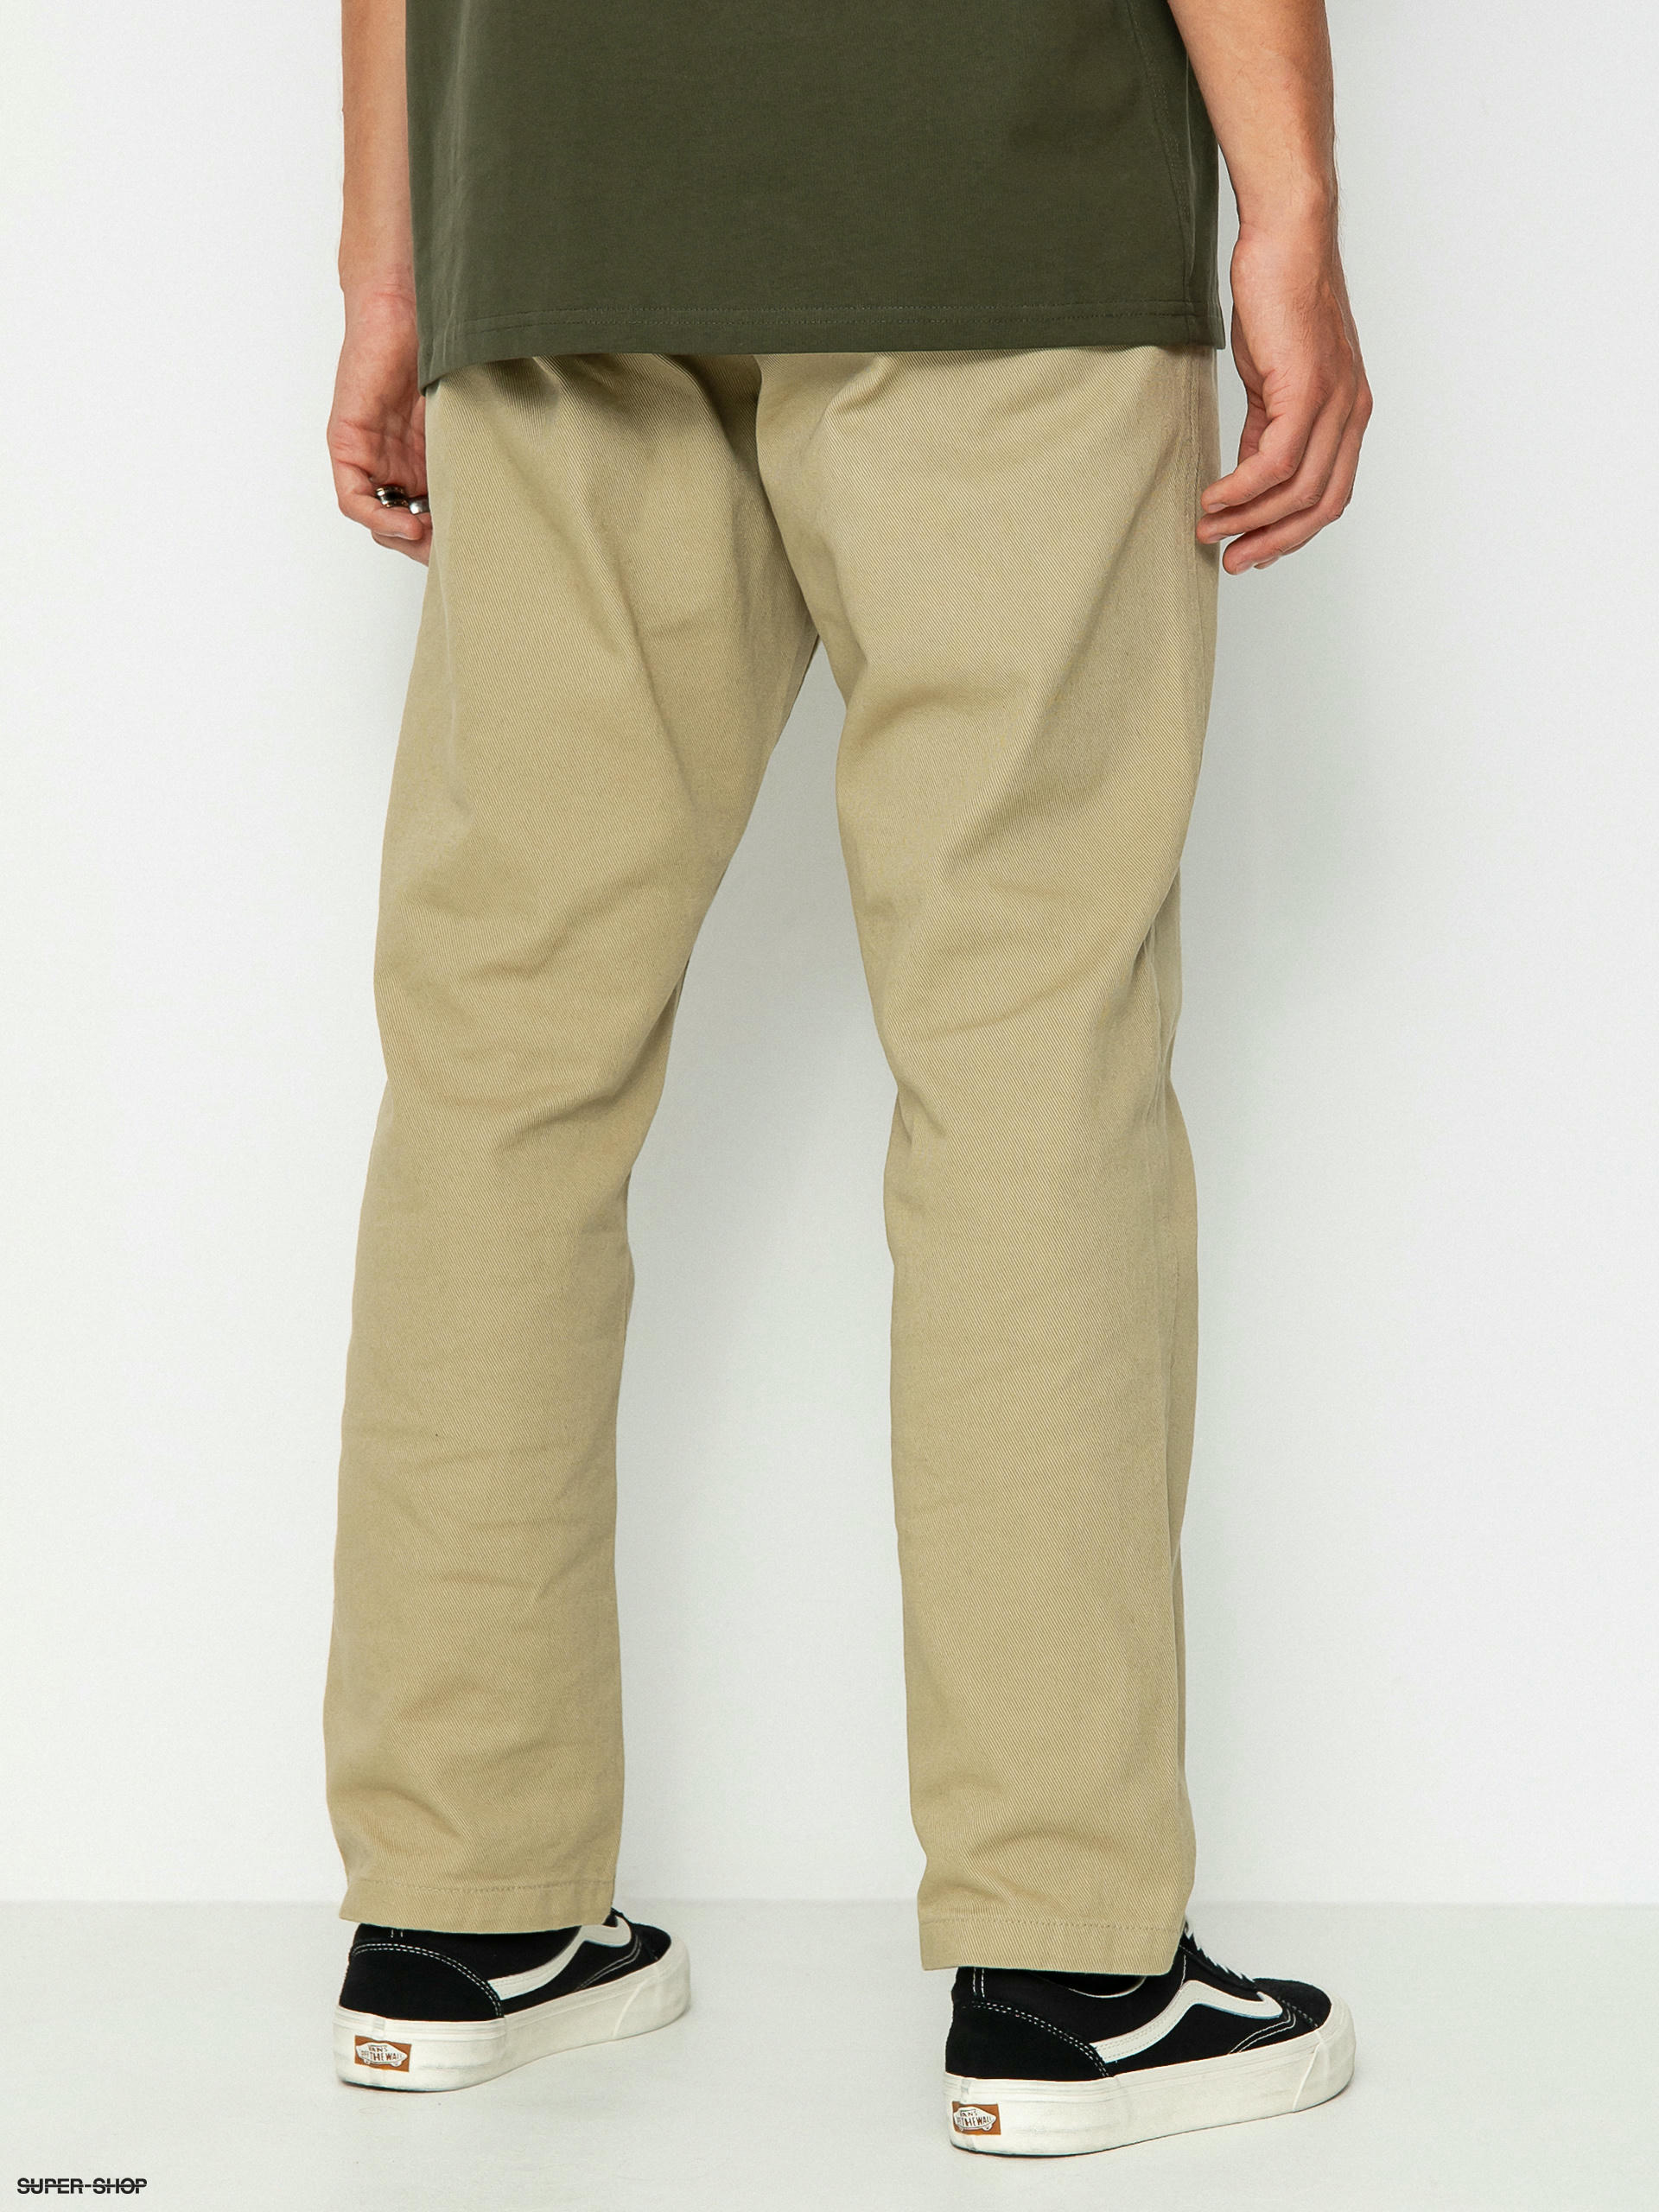 RVCA Americana Chino Pants (khaki)